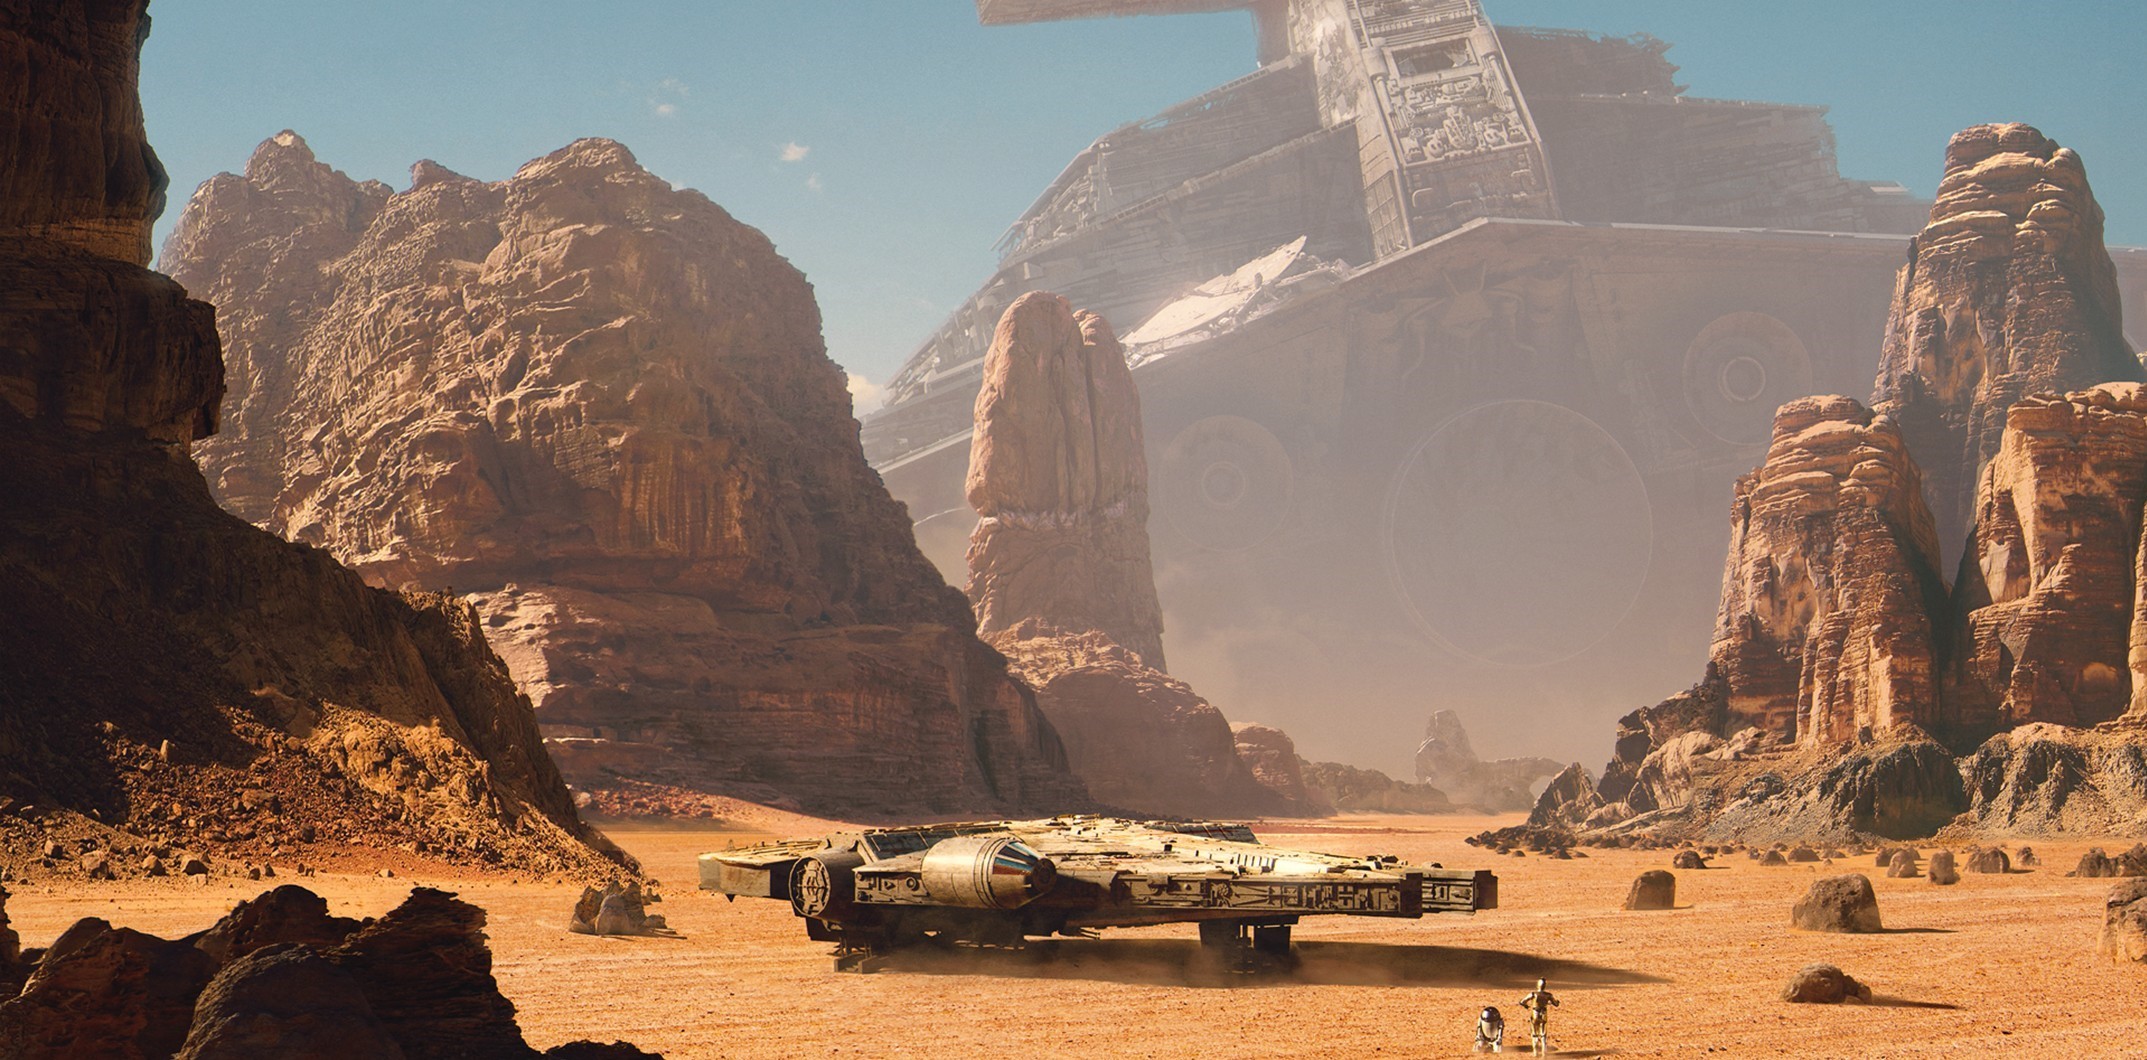 General 2147x1060 Star Wars Millennium Falcon science fiction planet spaceship Star Wars Ships CGI digital art Star Wars Droids vehicle